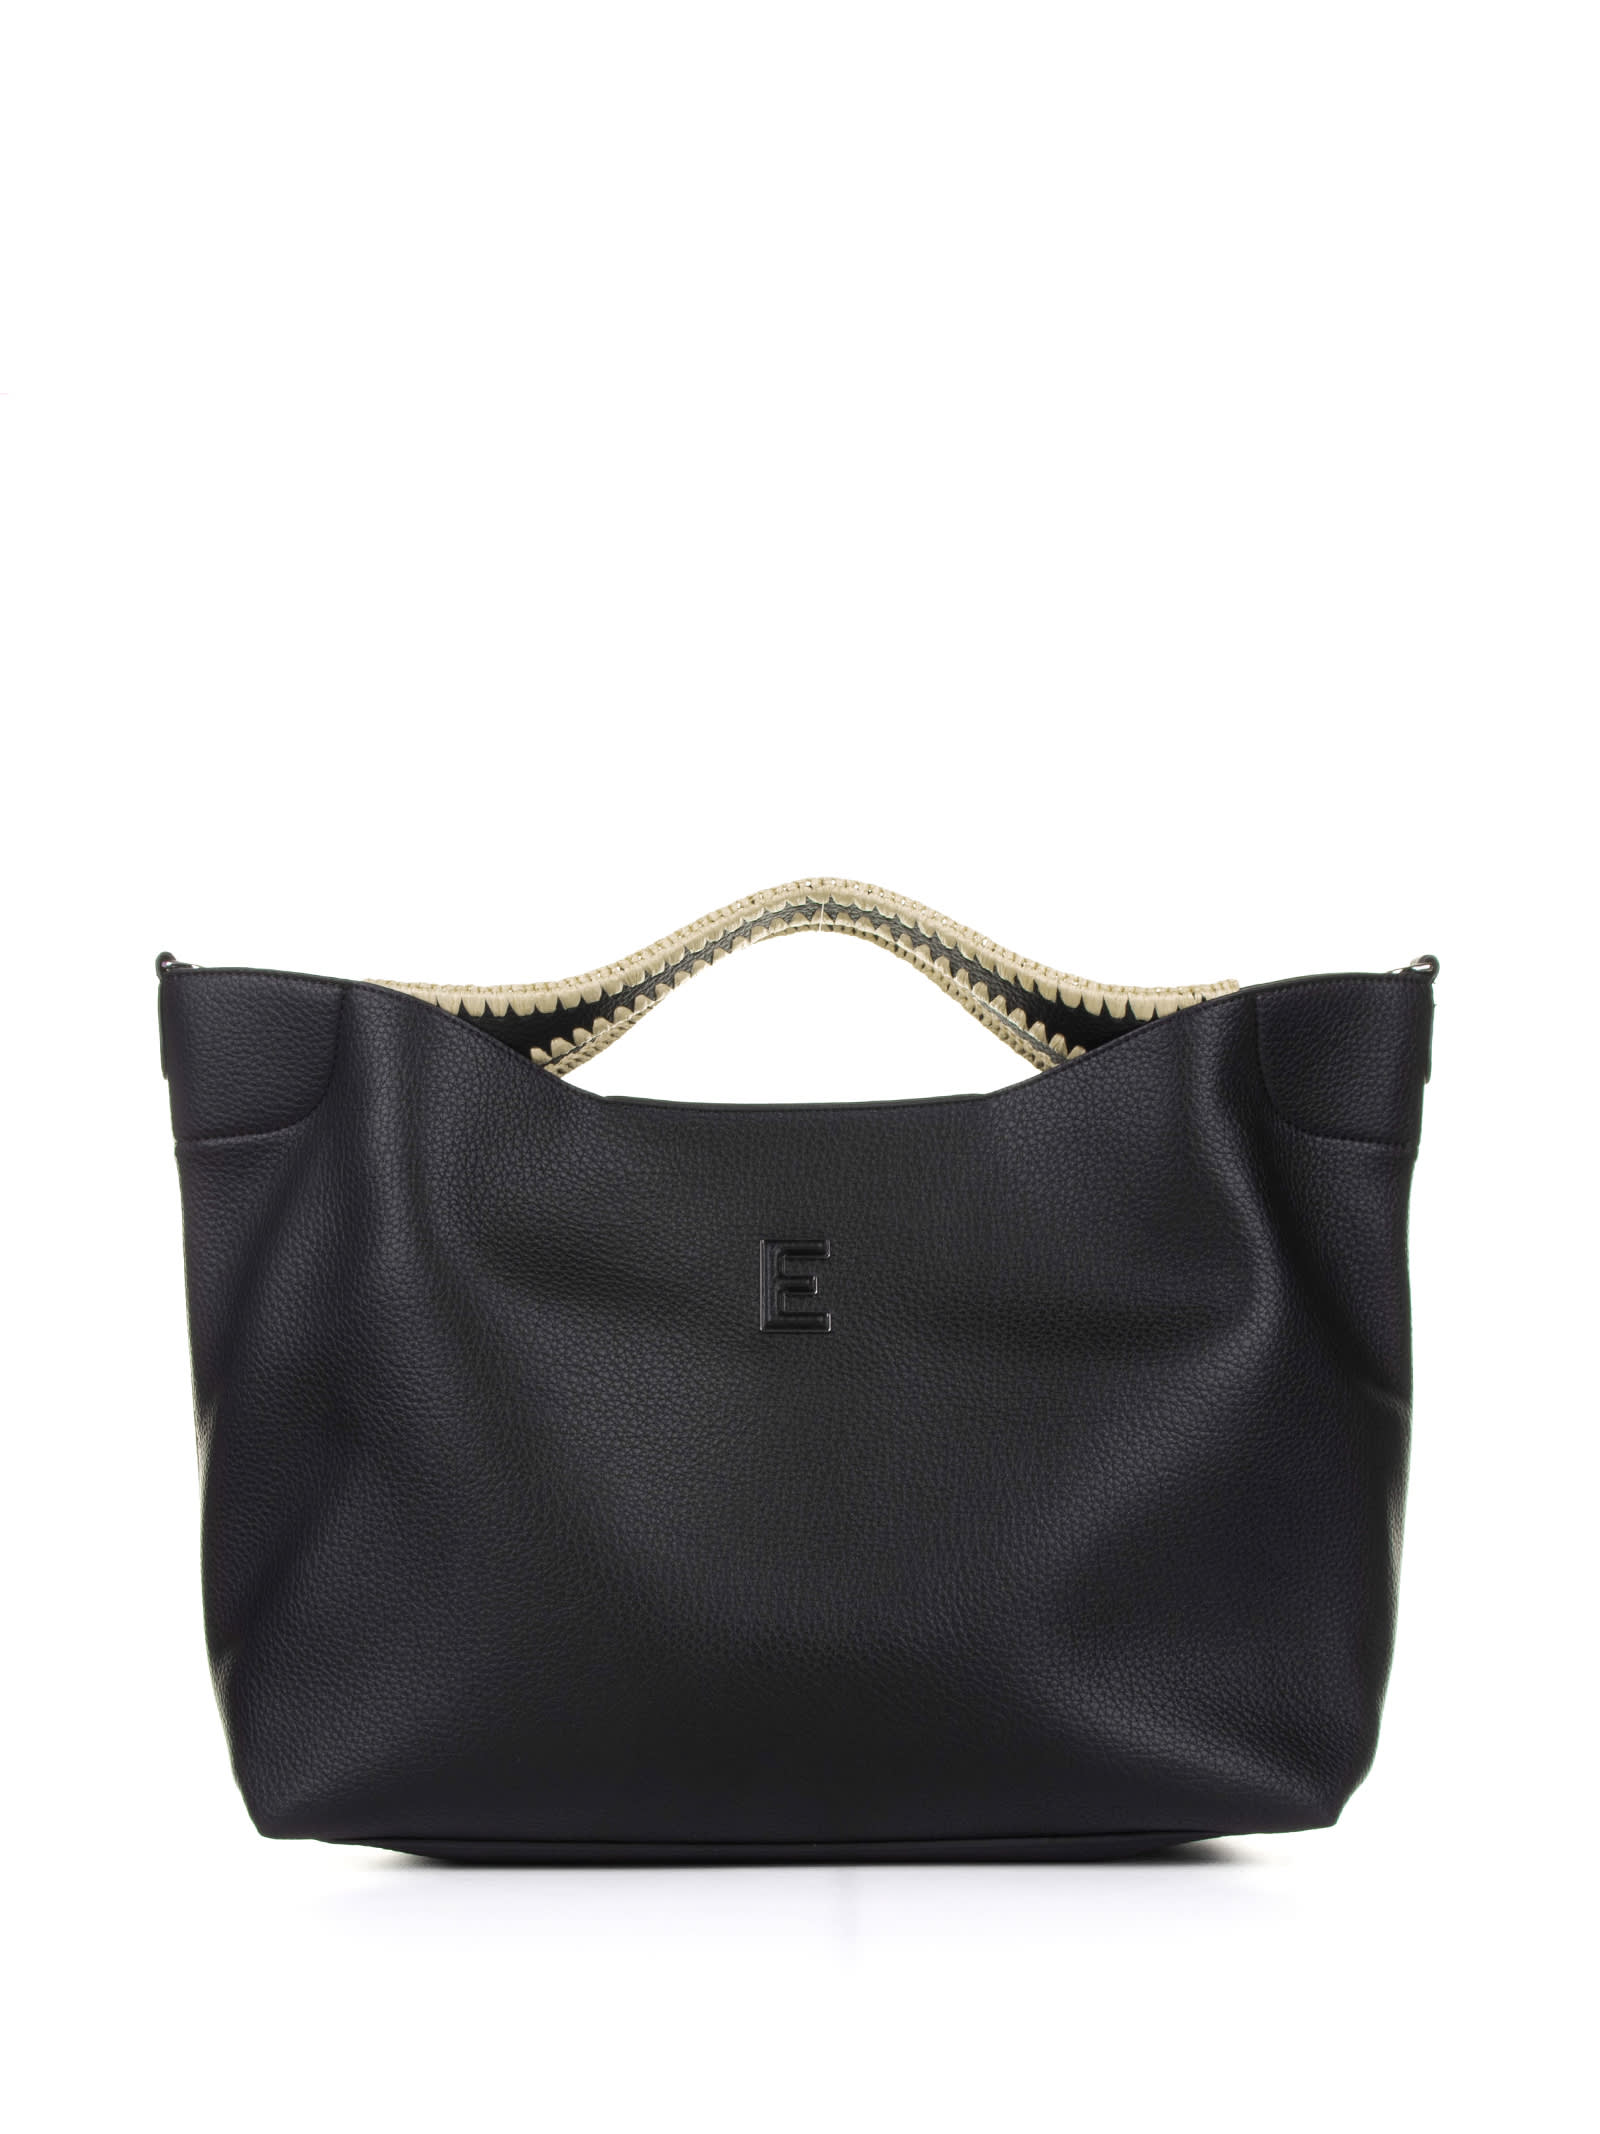 Rachele Large Black Leather Handbag